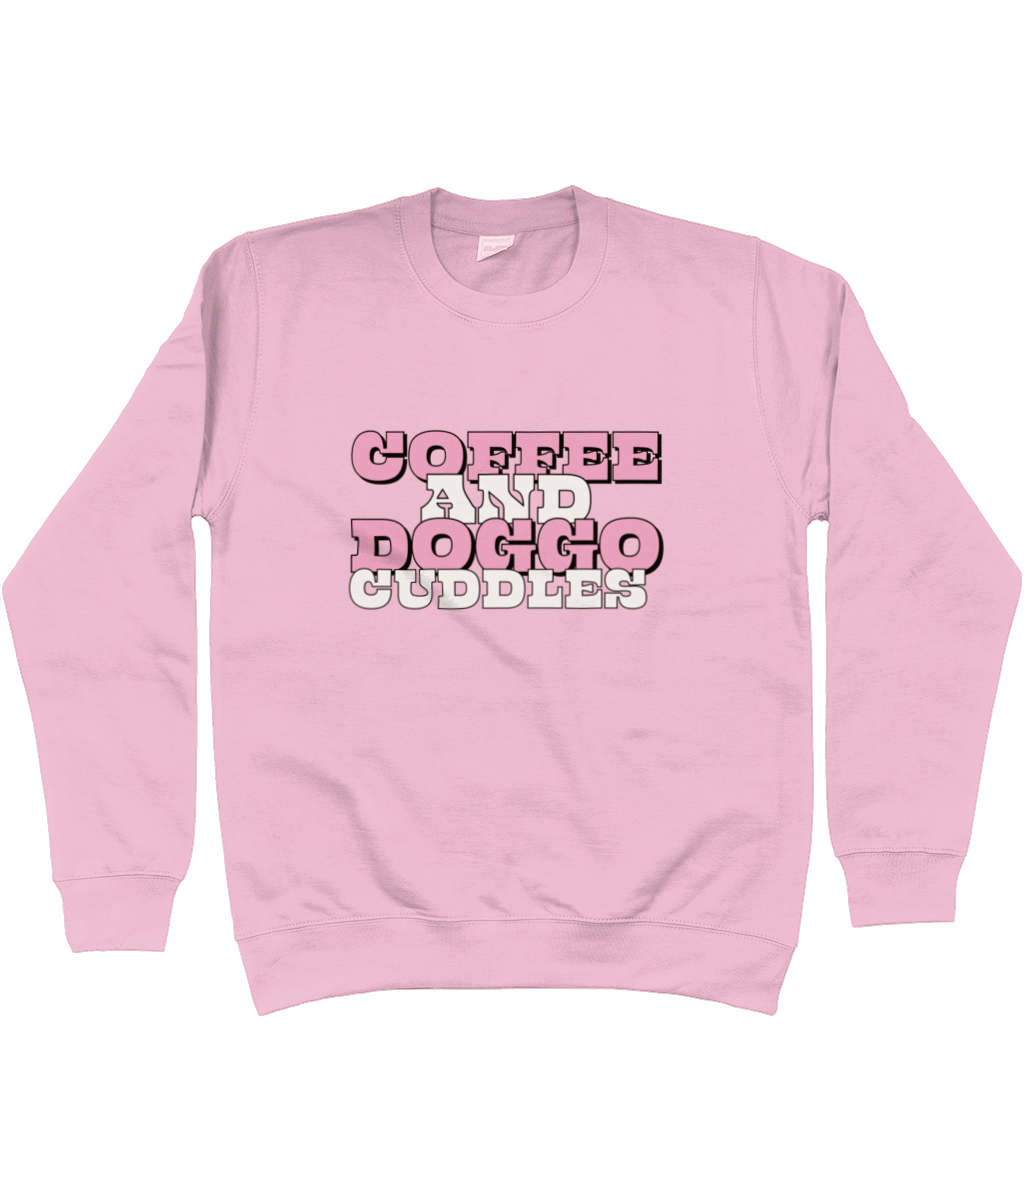 coffee and doggo cuddles sweatshirt